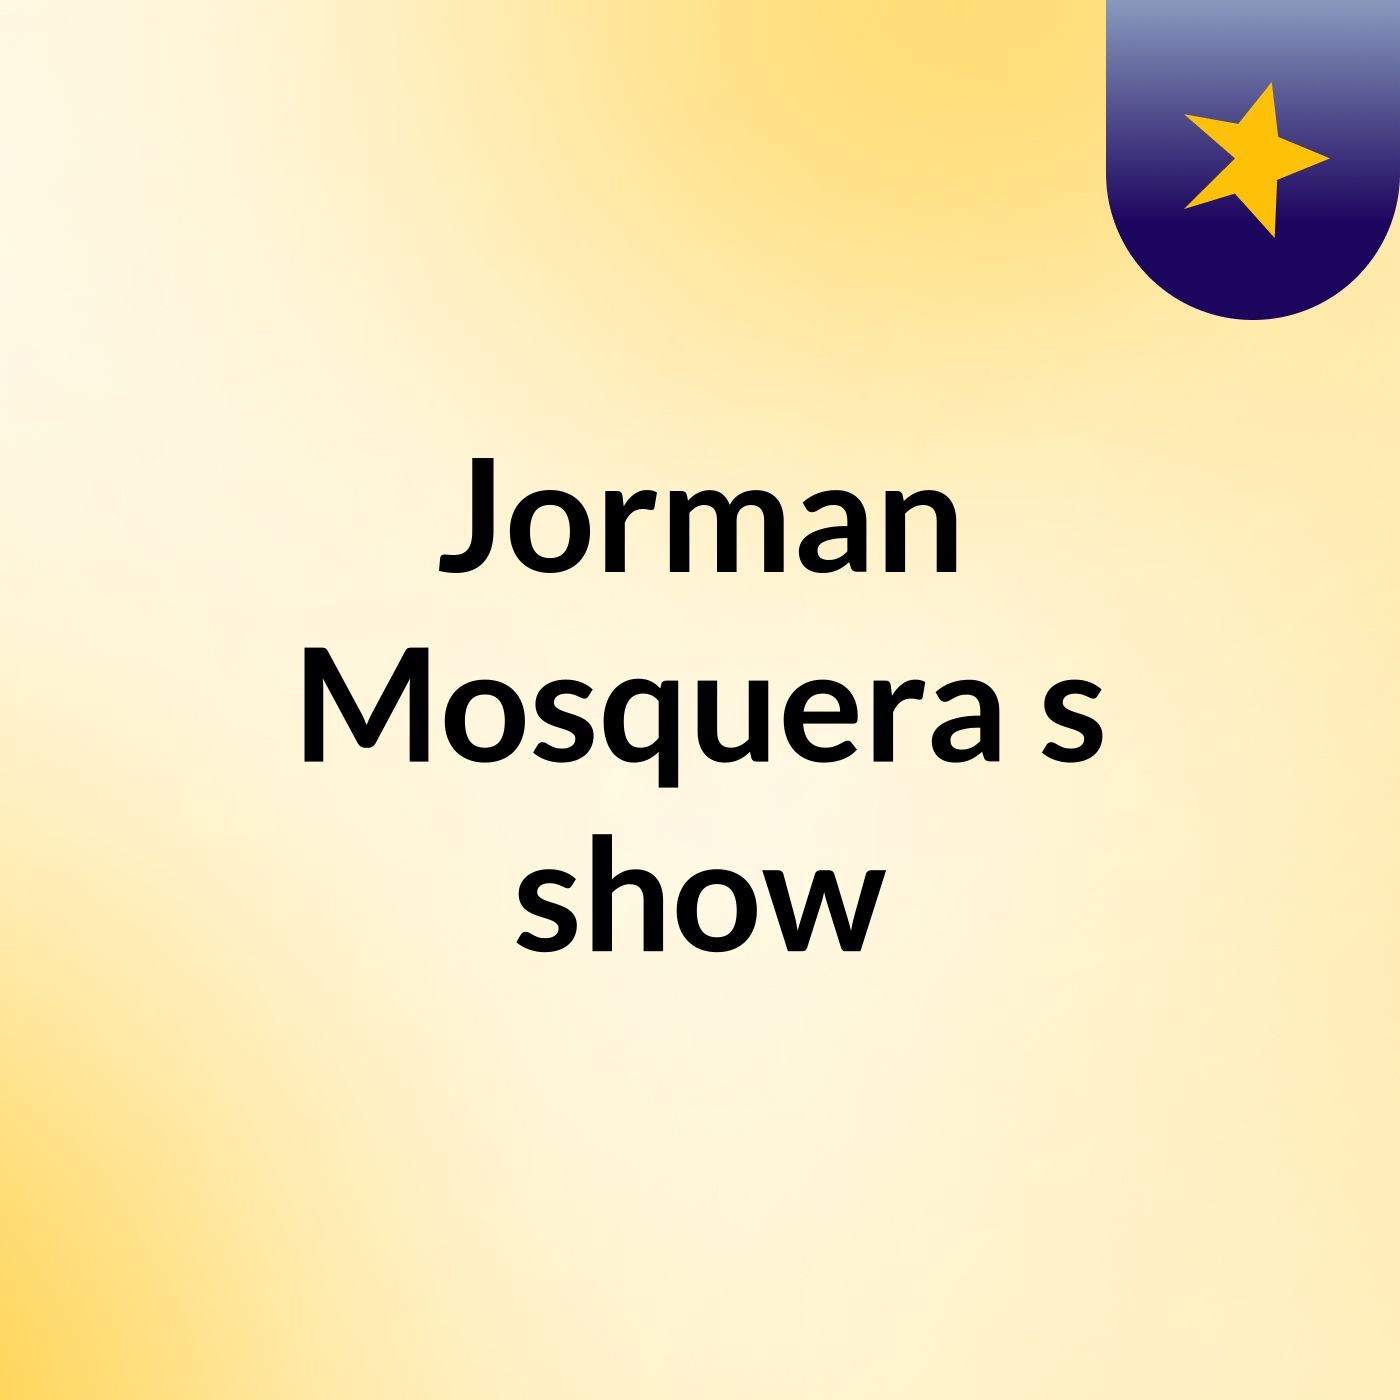 Jorman Mosquera's show